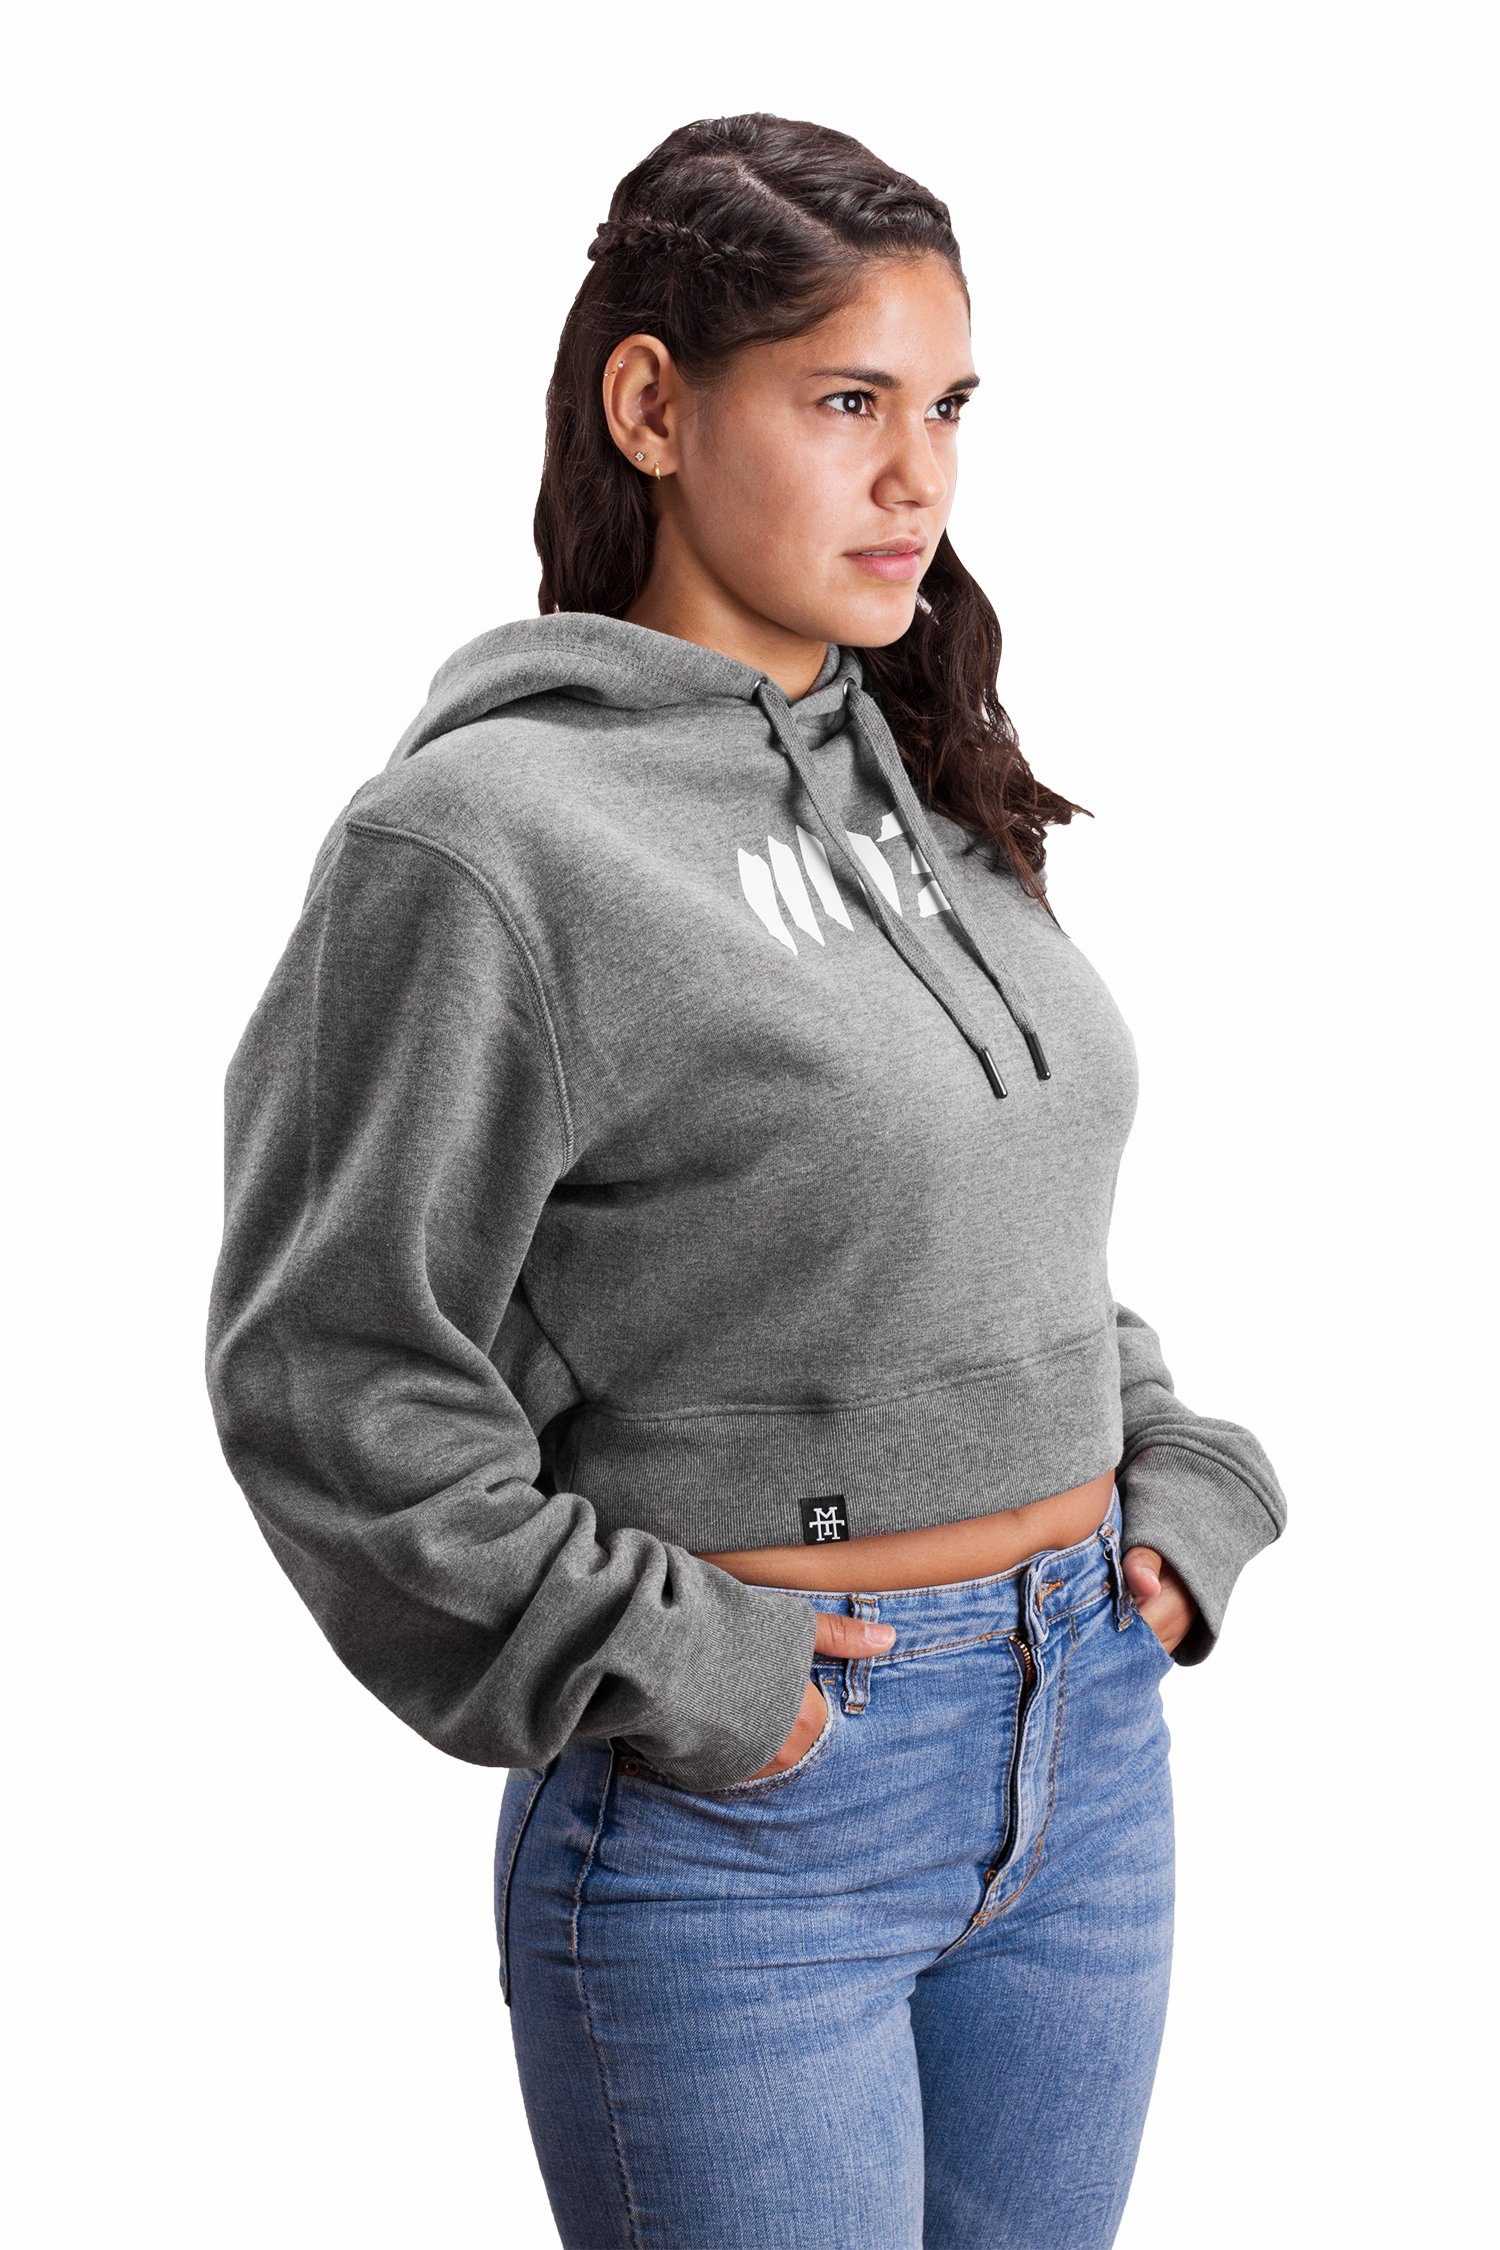 Sweater Oversize kurzer Cropped Hoodie Asphalt Kapuzenpullover, - Hoodie Manufaktur13 Crop